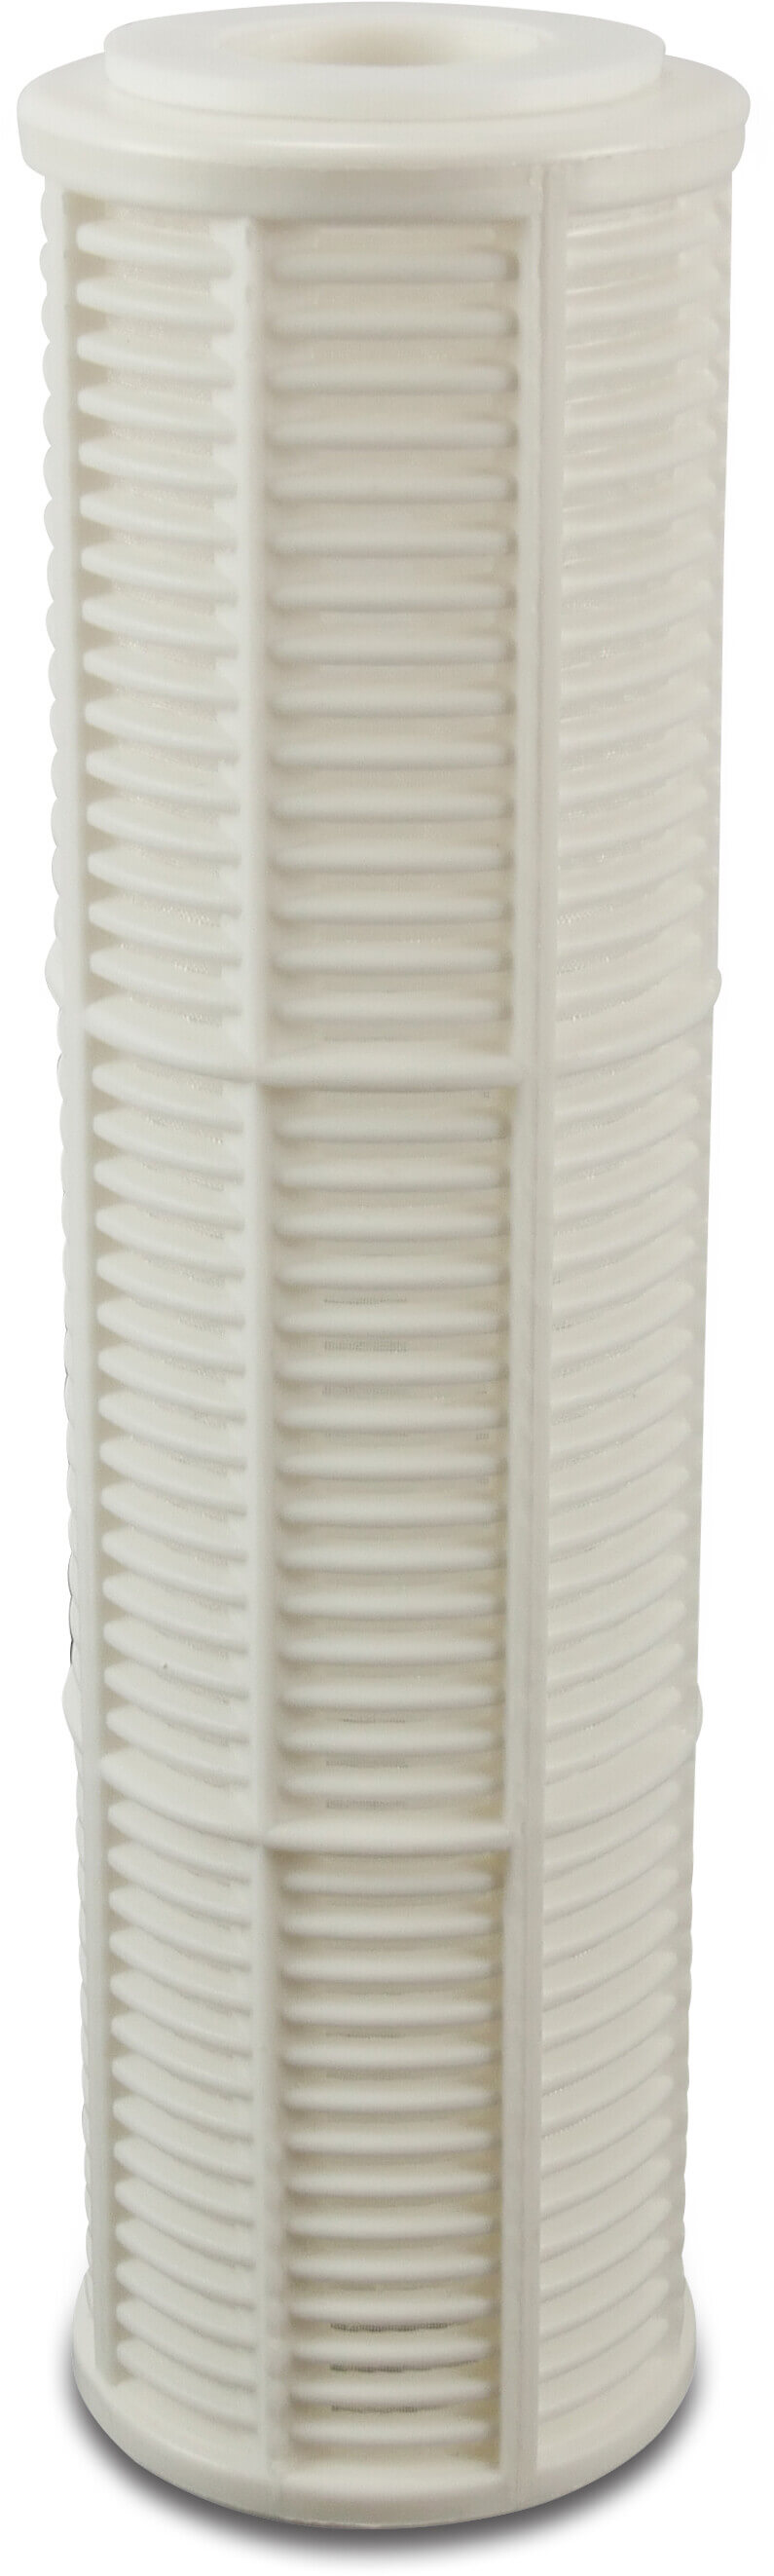 Profec Filter cartridge nylon 60micron polyester gauze type 10" filter